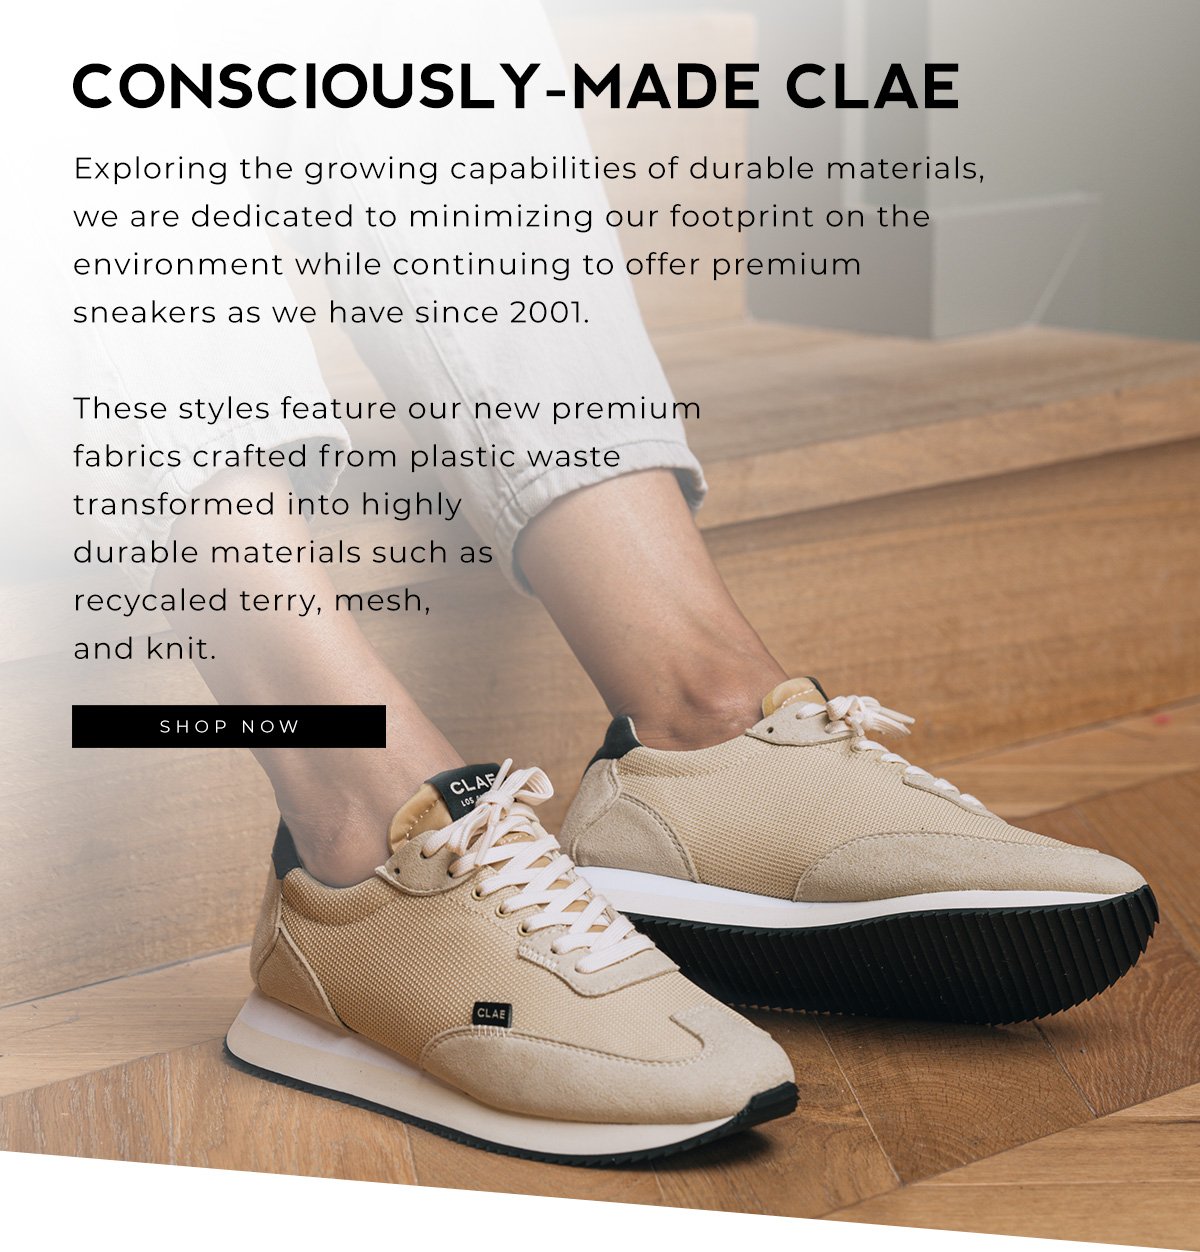 CLAE: Feel-good shoes you can feel good 